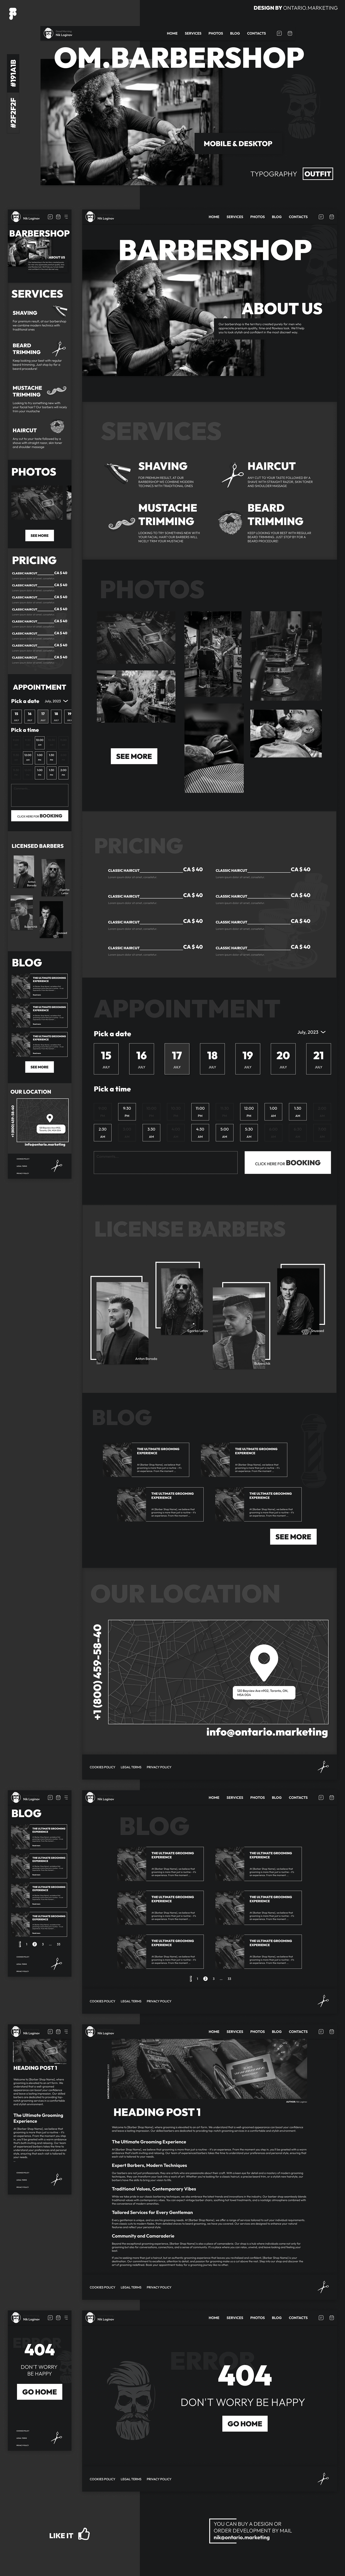 barbershop barbearia barber hair hairstyle Hair Salon Website Design landing page Web Design  Website